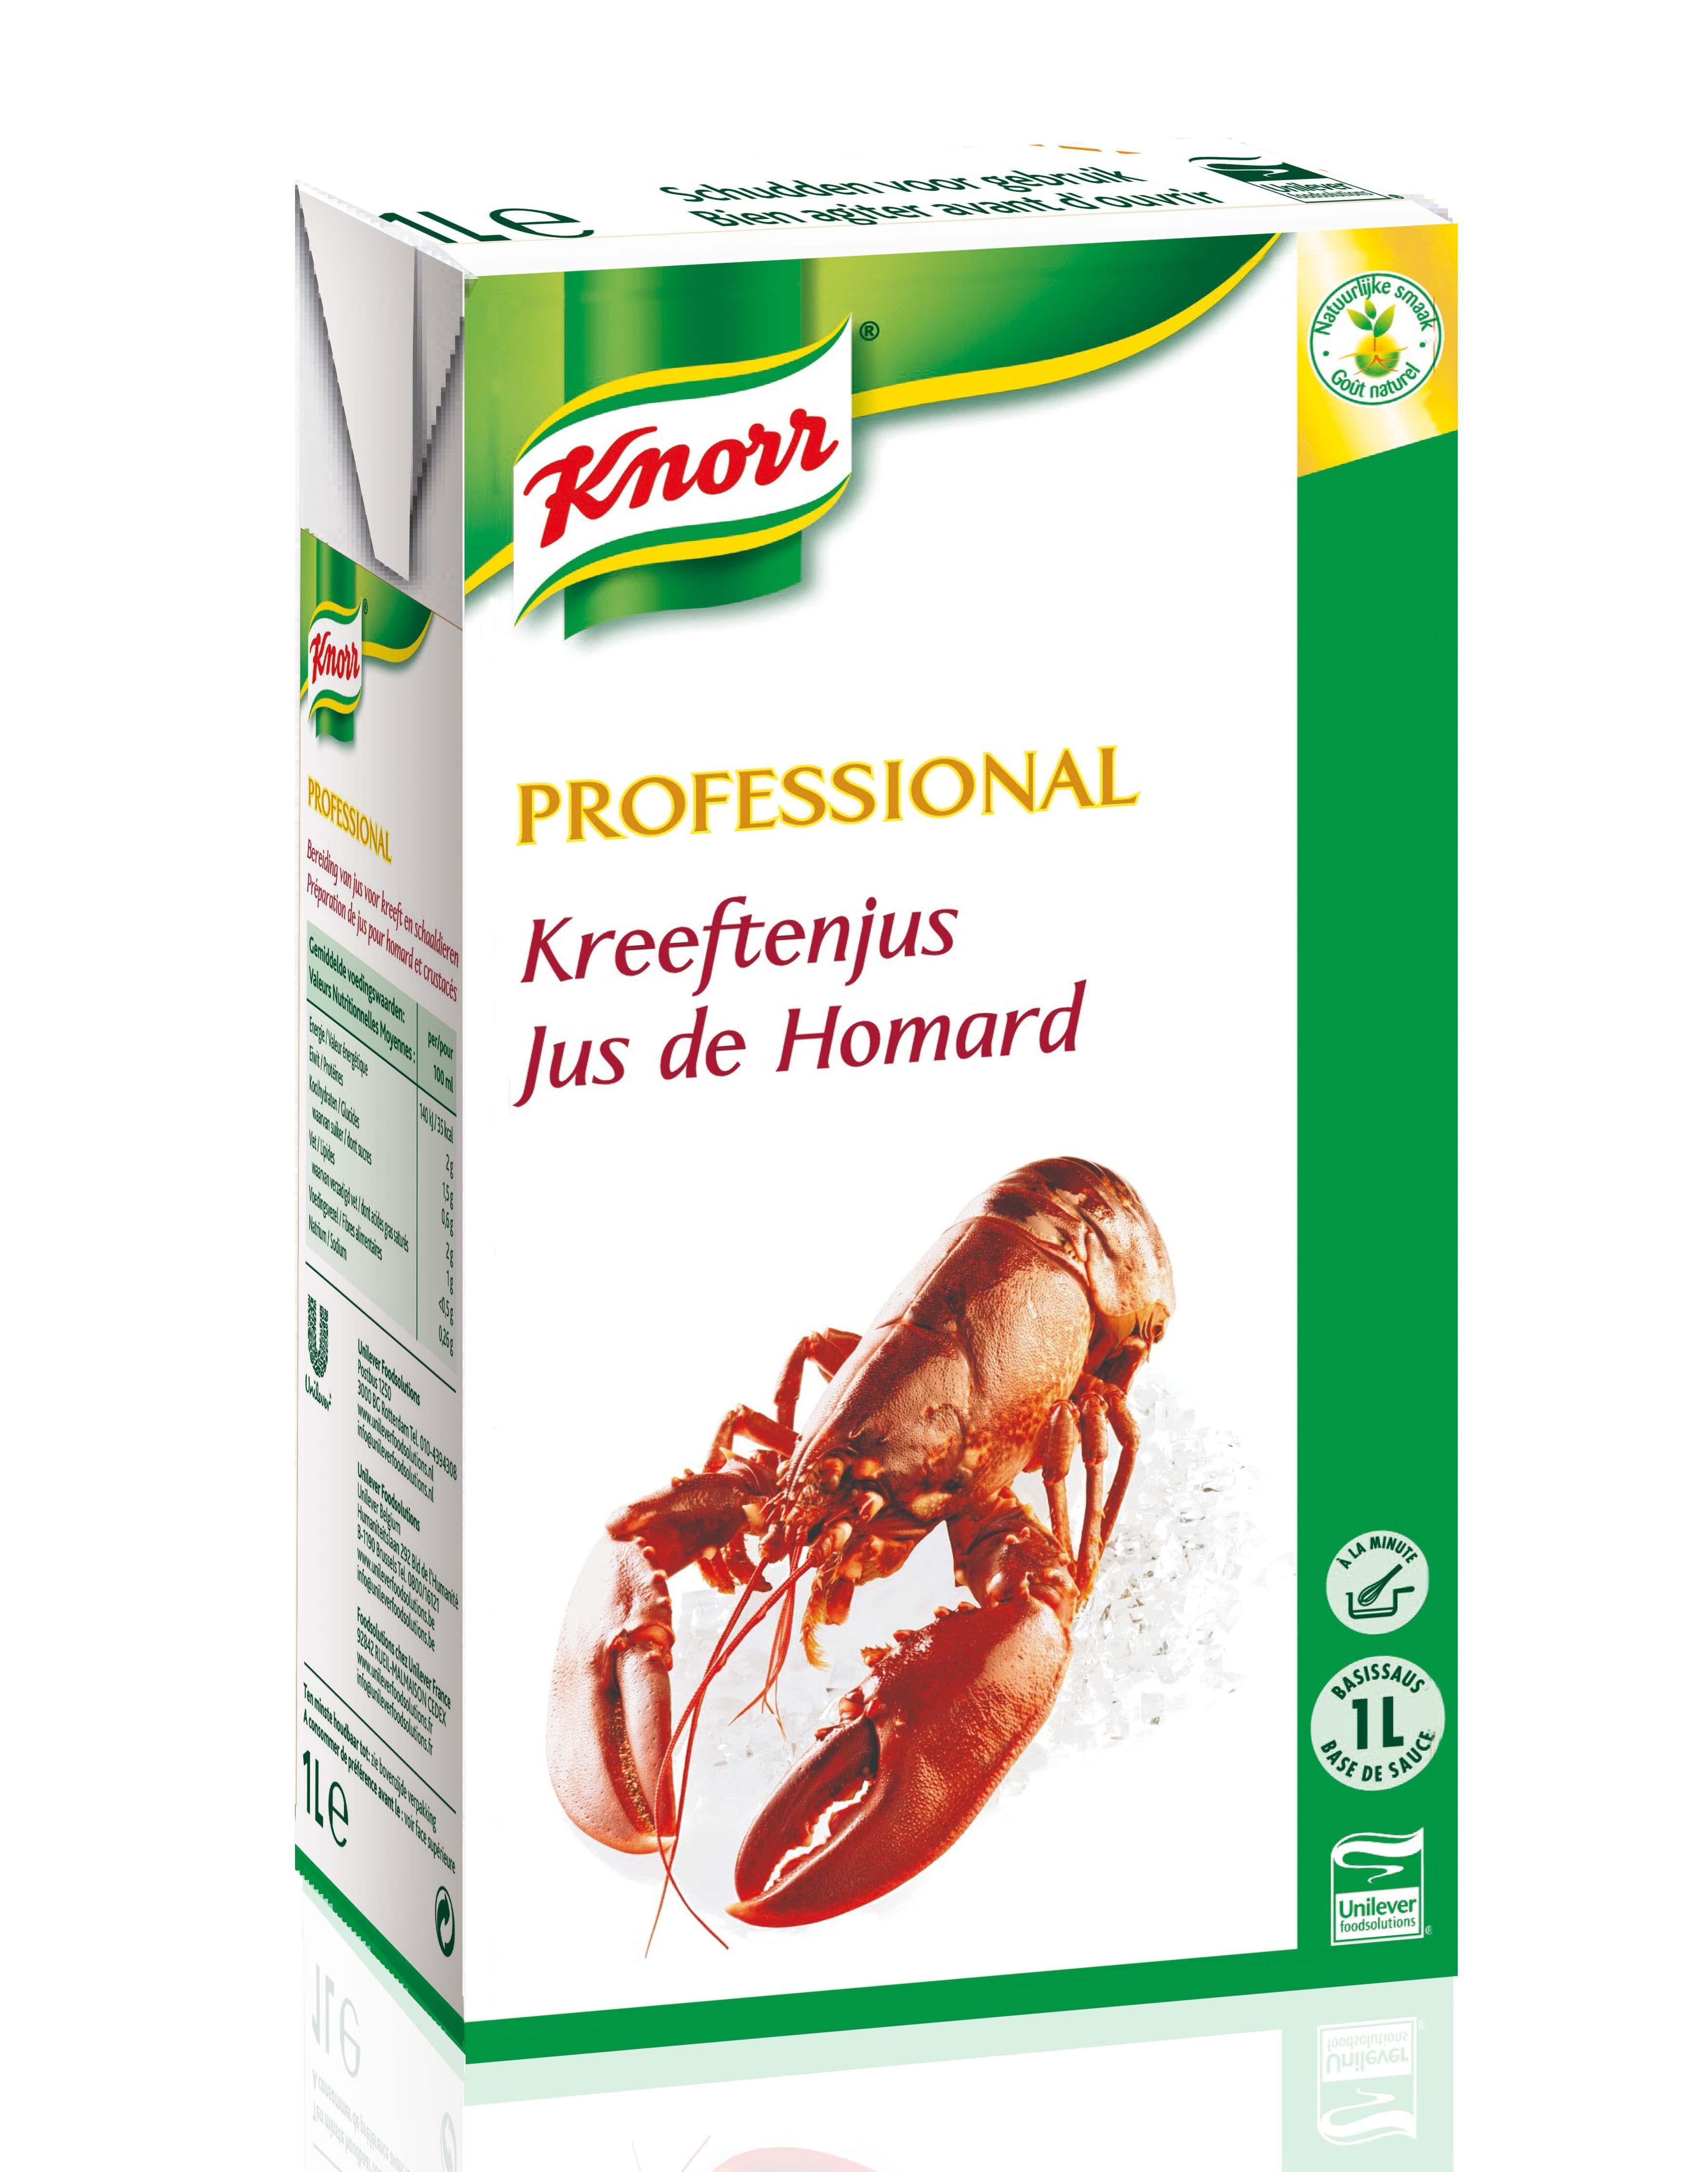 Knorr Professional jus de homard 1L brique